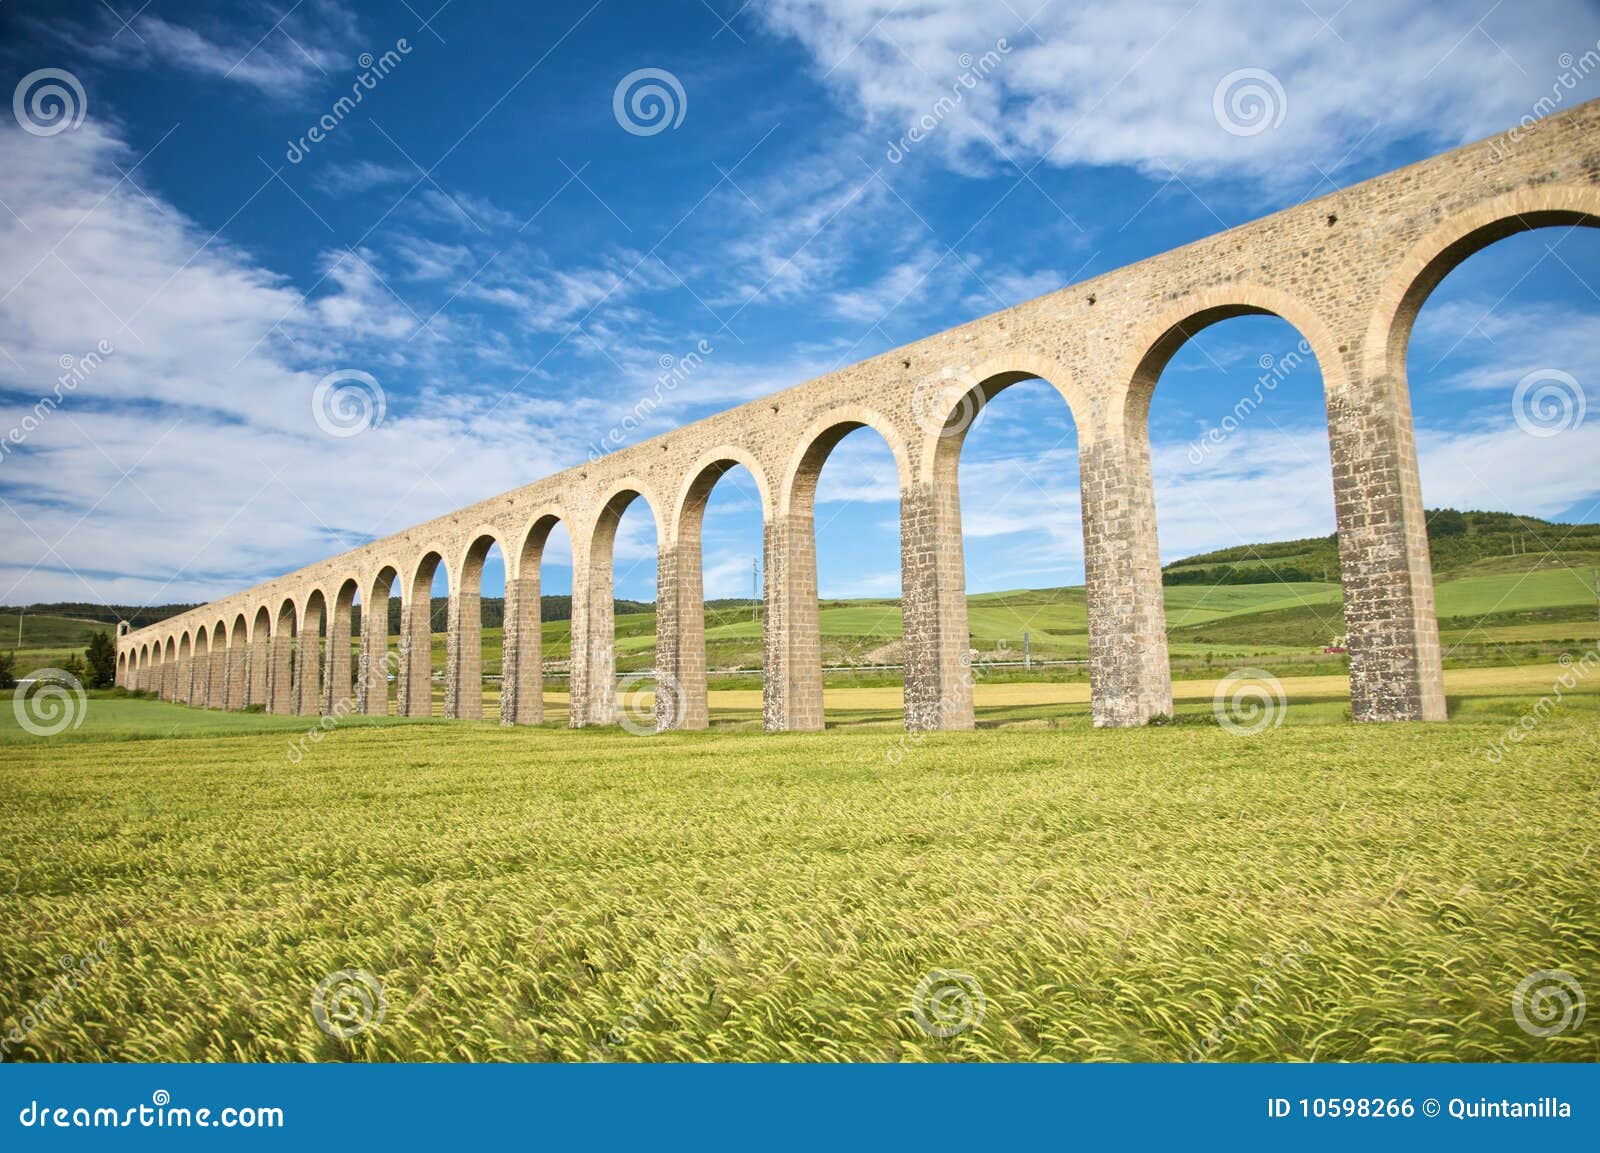 ancient aqueduct in pamplona